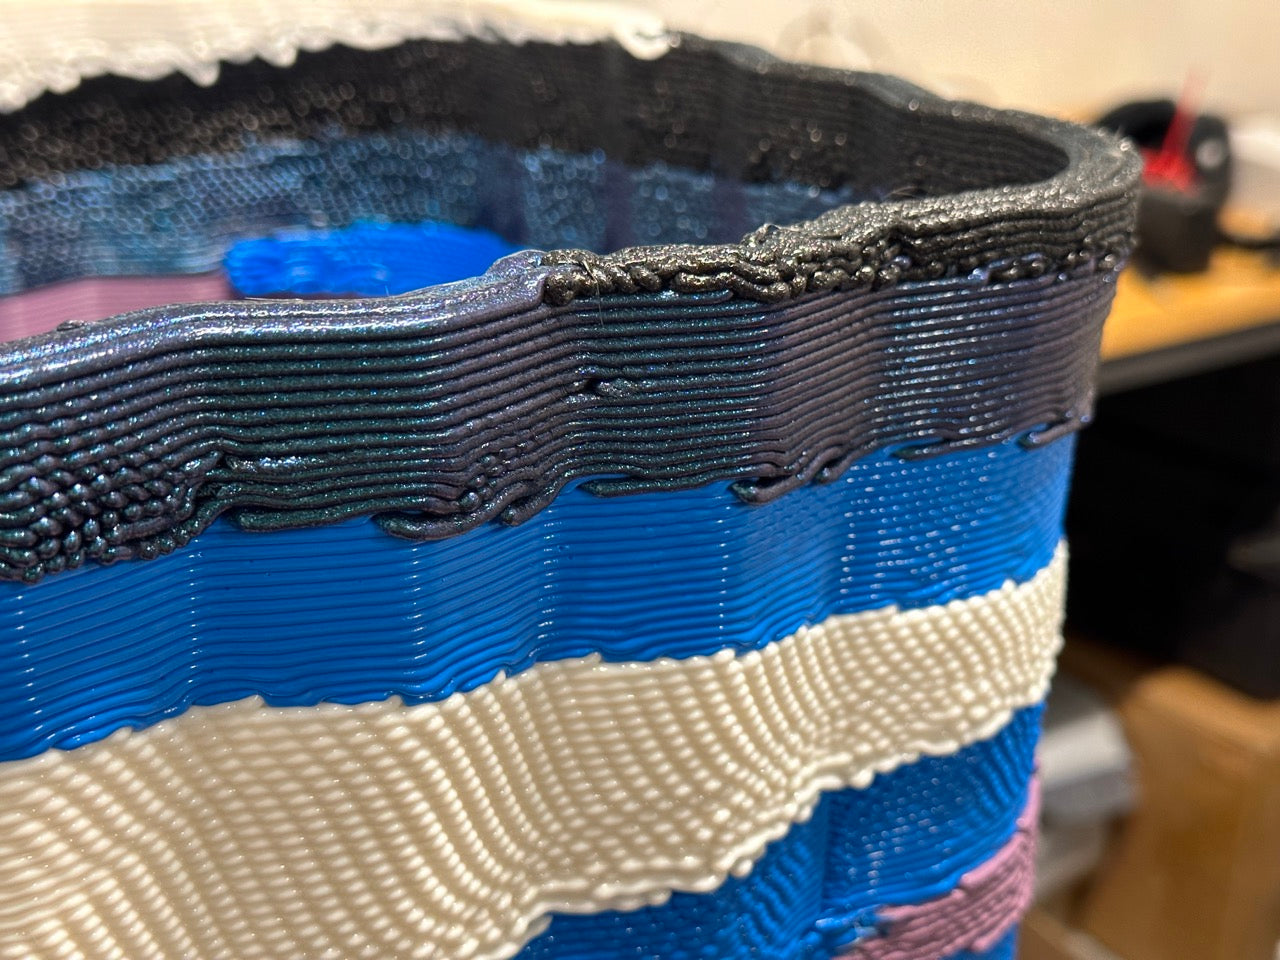 3D Printed Trash Bin